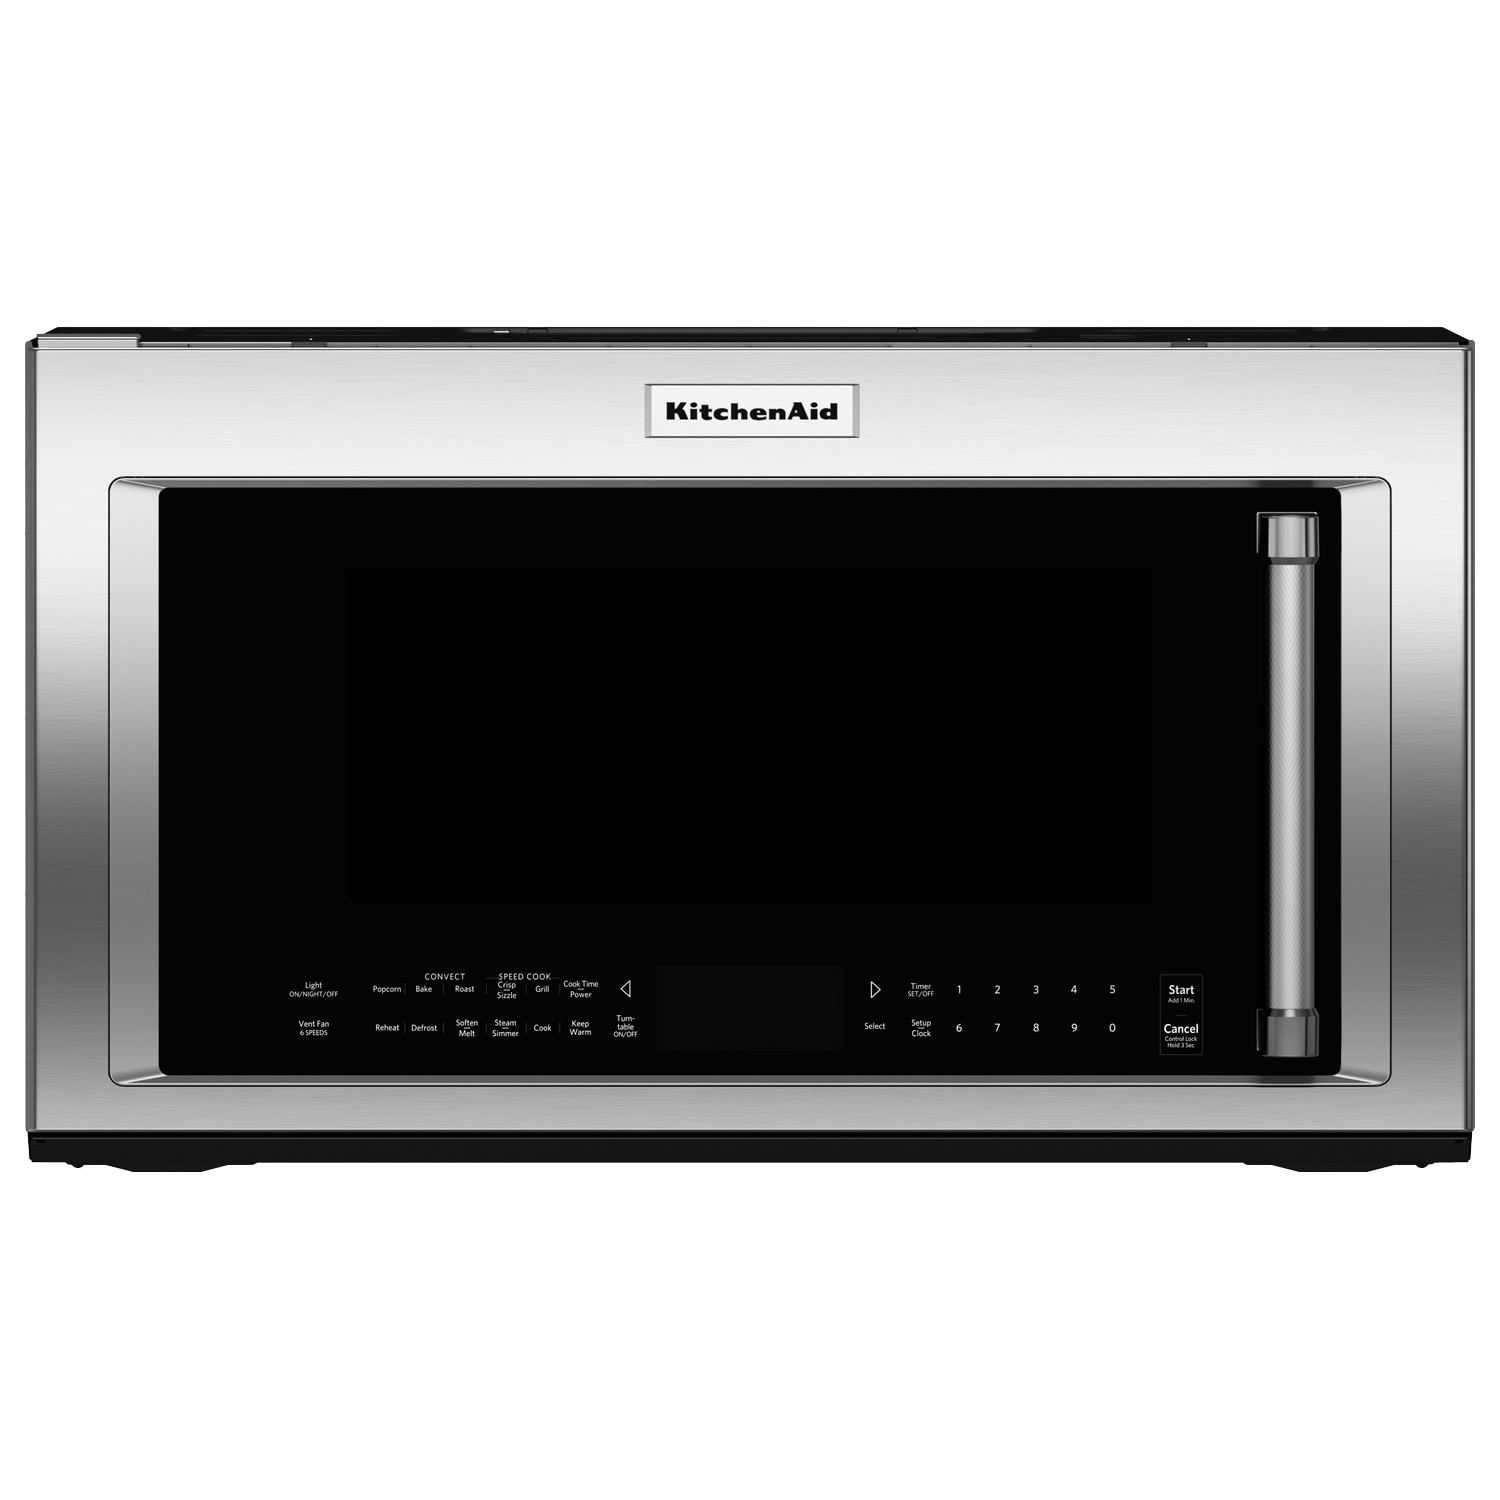 KitchenAid Microwave Model KMHP519ESS